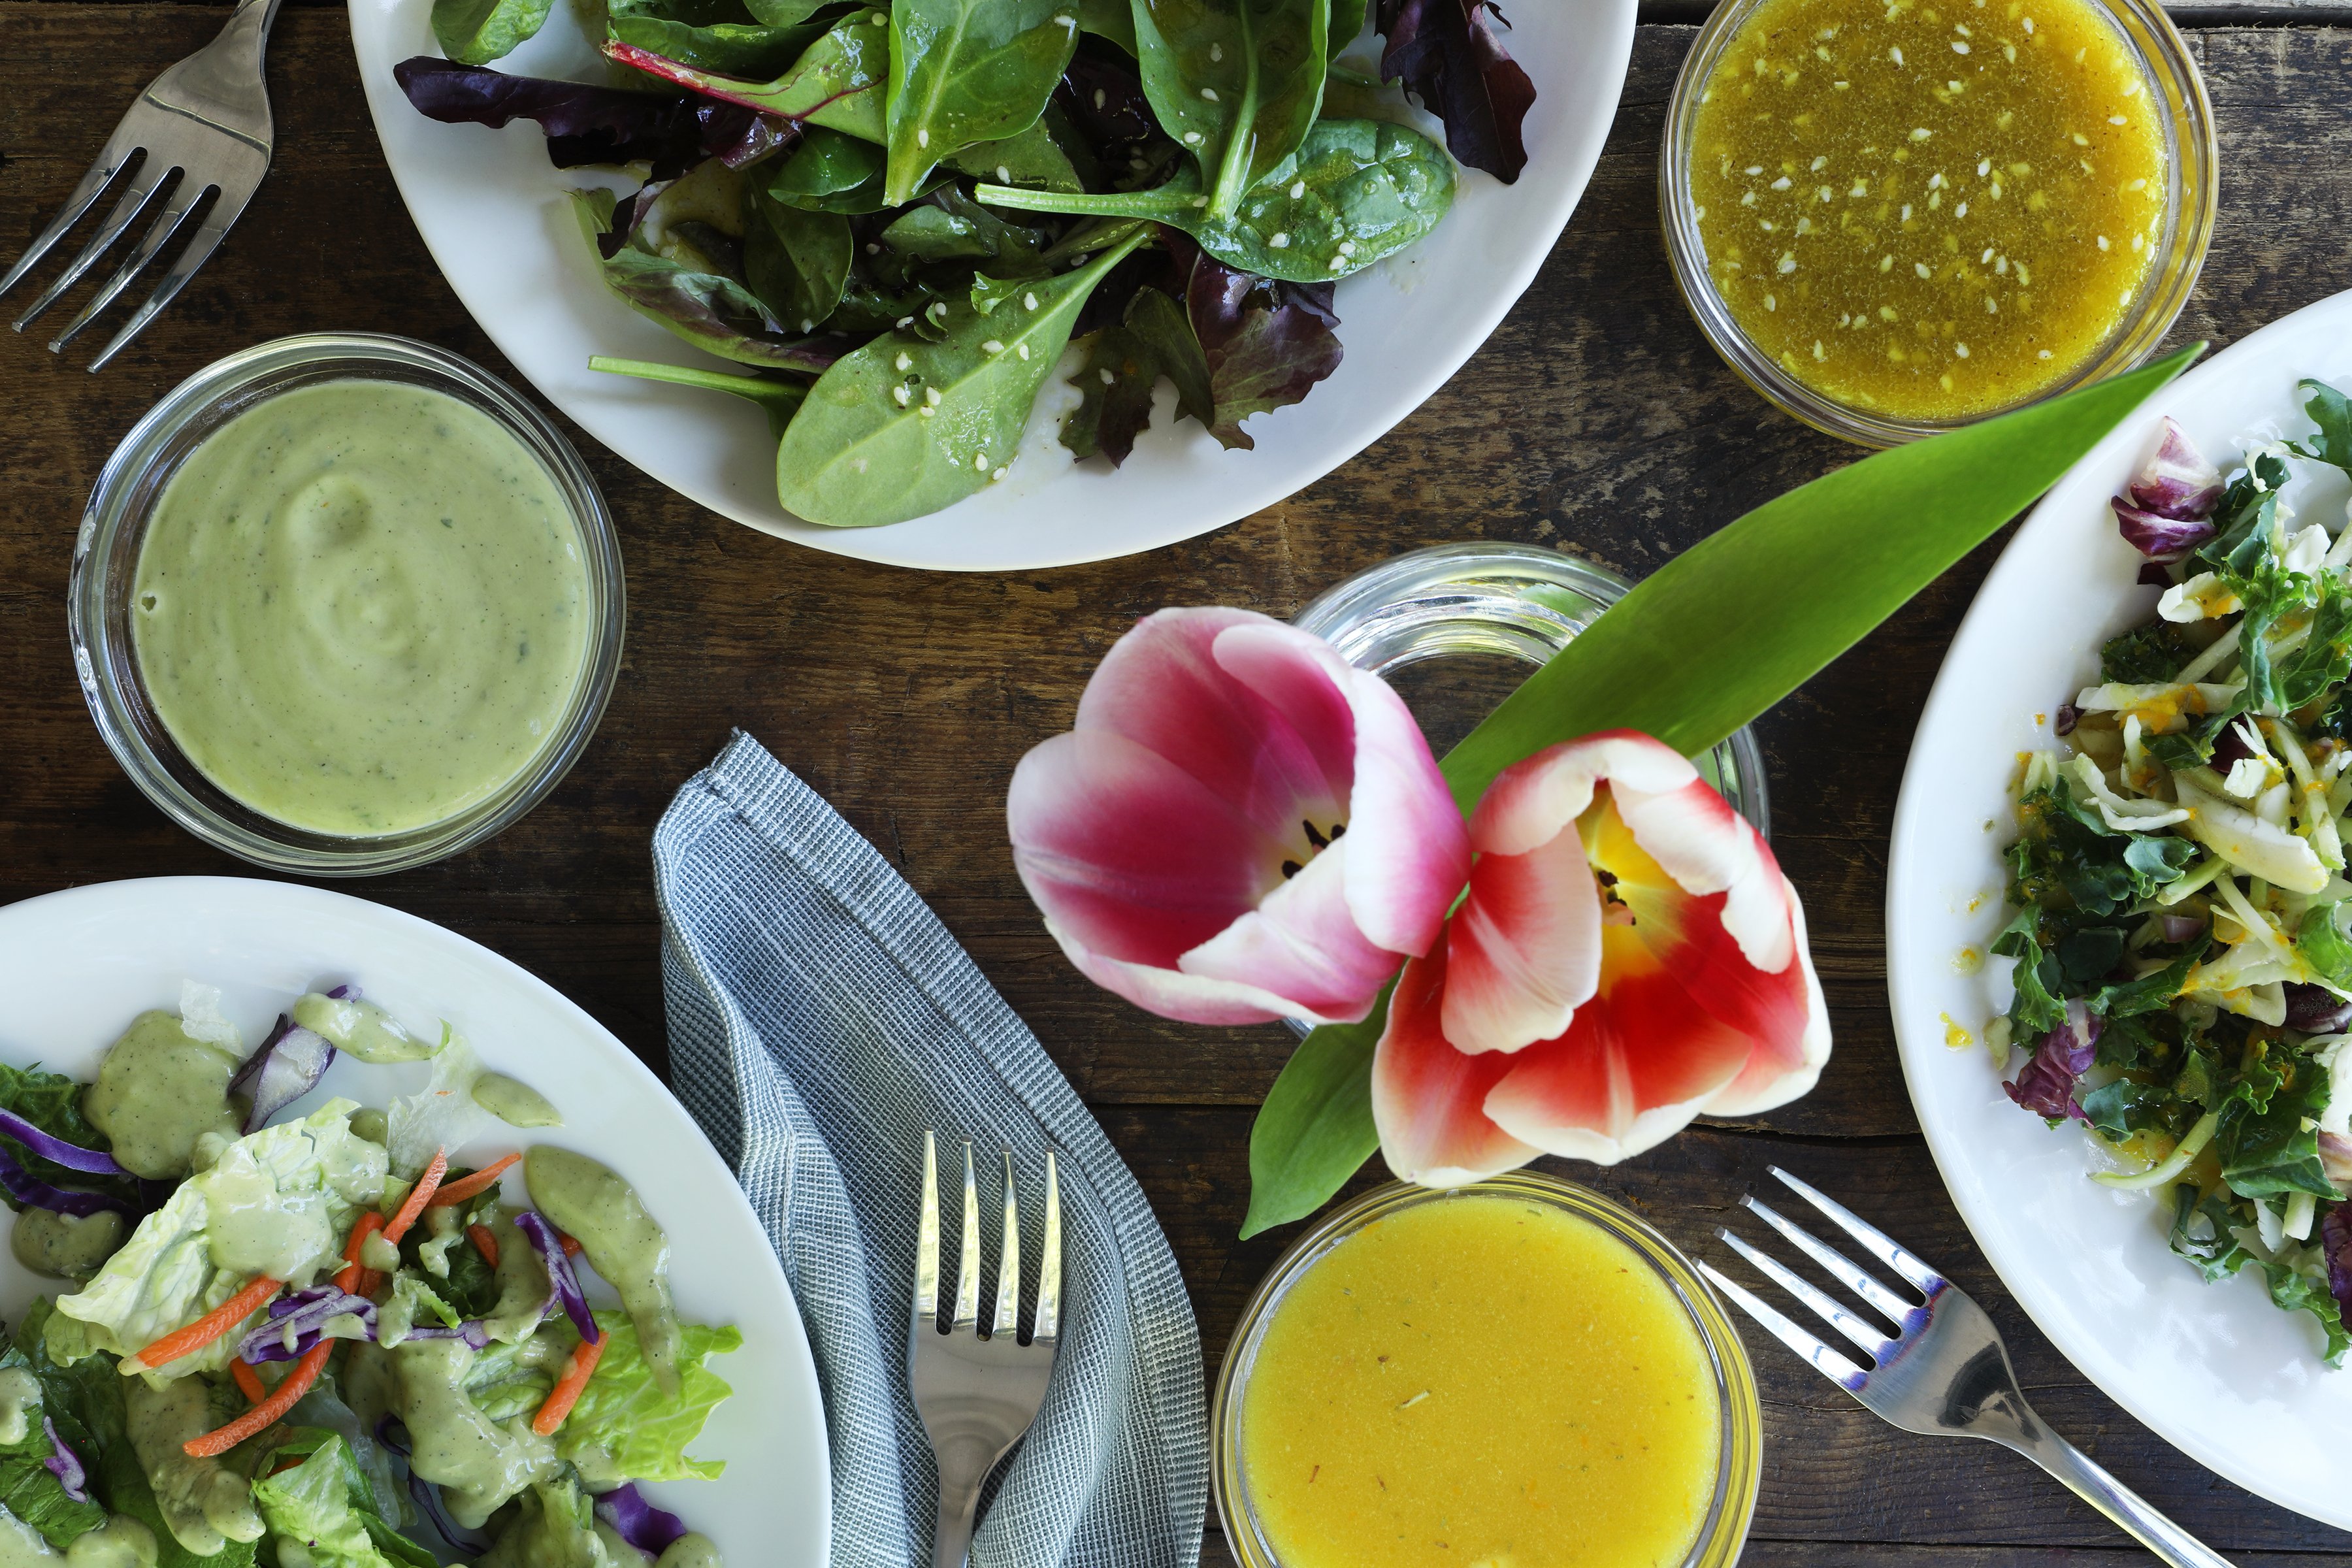 Three bowls of fresh salad greens arranged with fresh tulips and organic salad dressings.